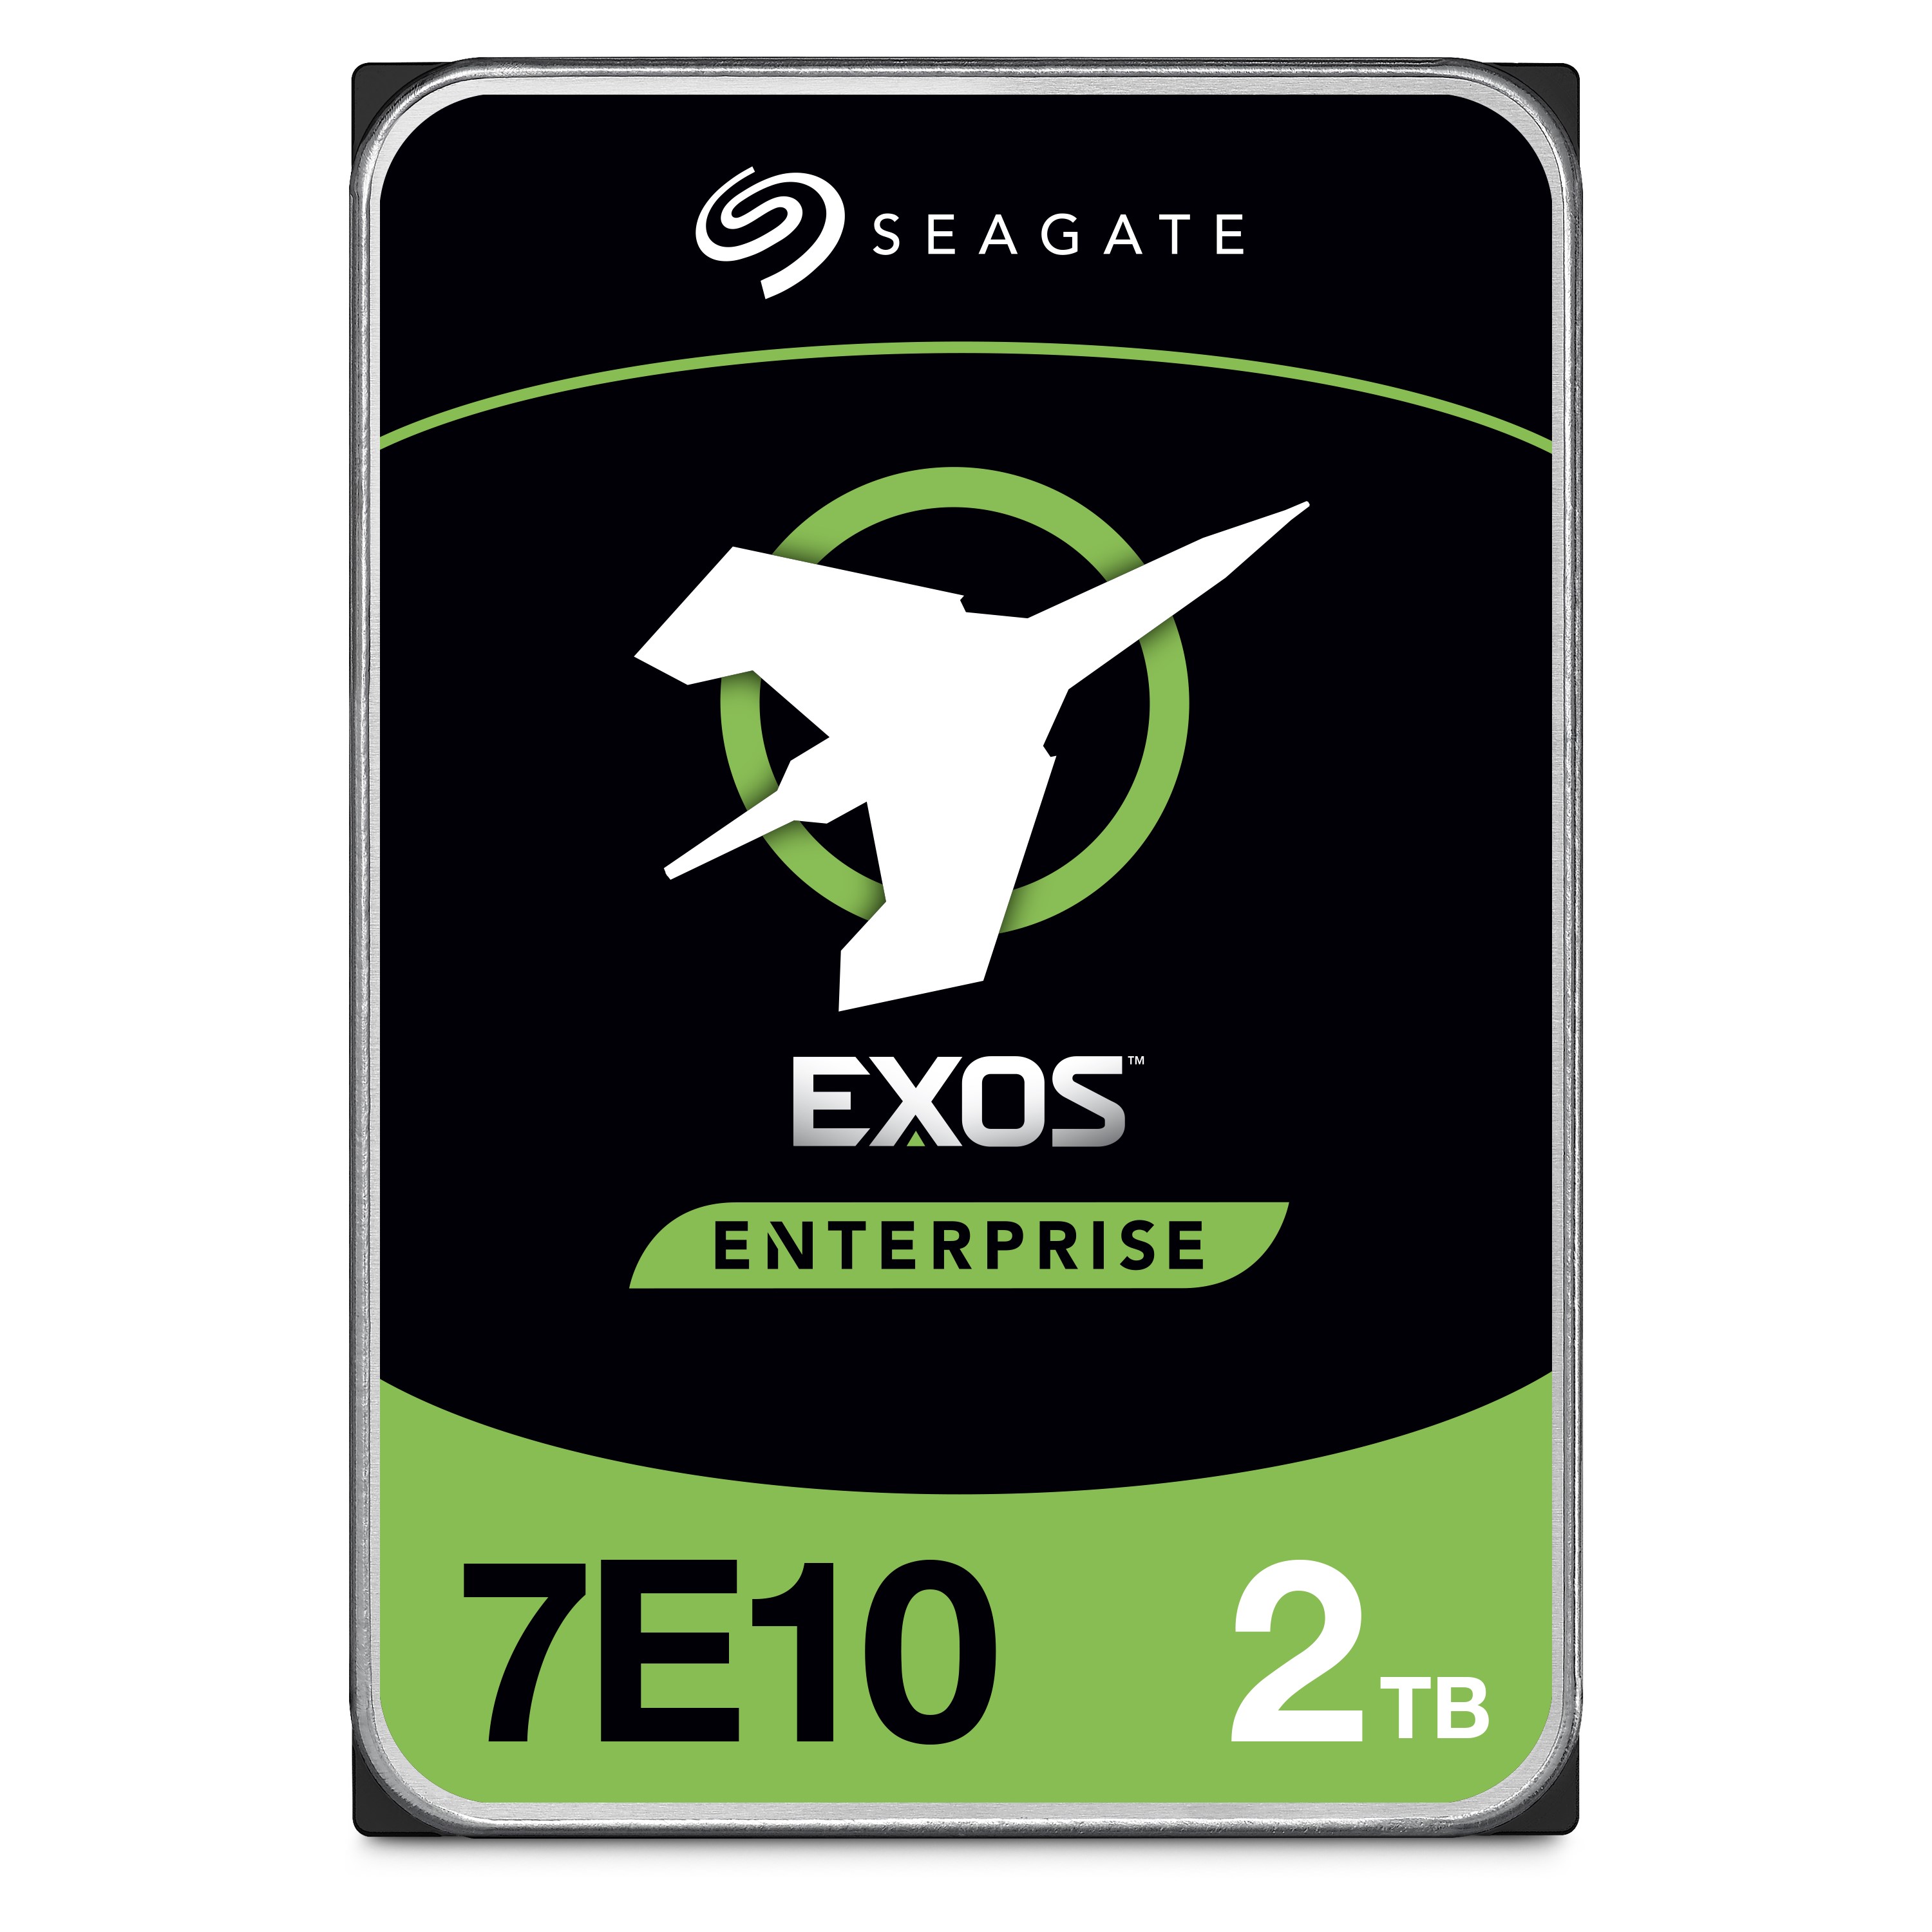 Seagate シーゲイト Exos 7E10 SATA 512e 3.5インチ 2TB 内蔵 ハードディスク HDD CMR 5年保証 6Gb/s 256MB 7200rpm …